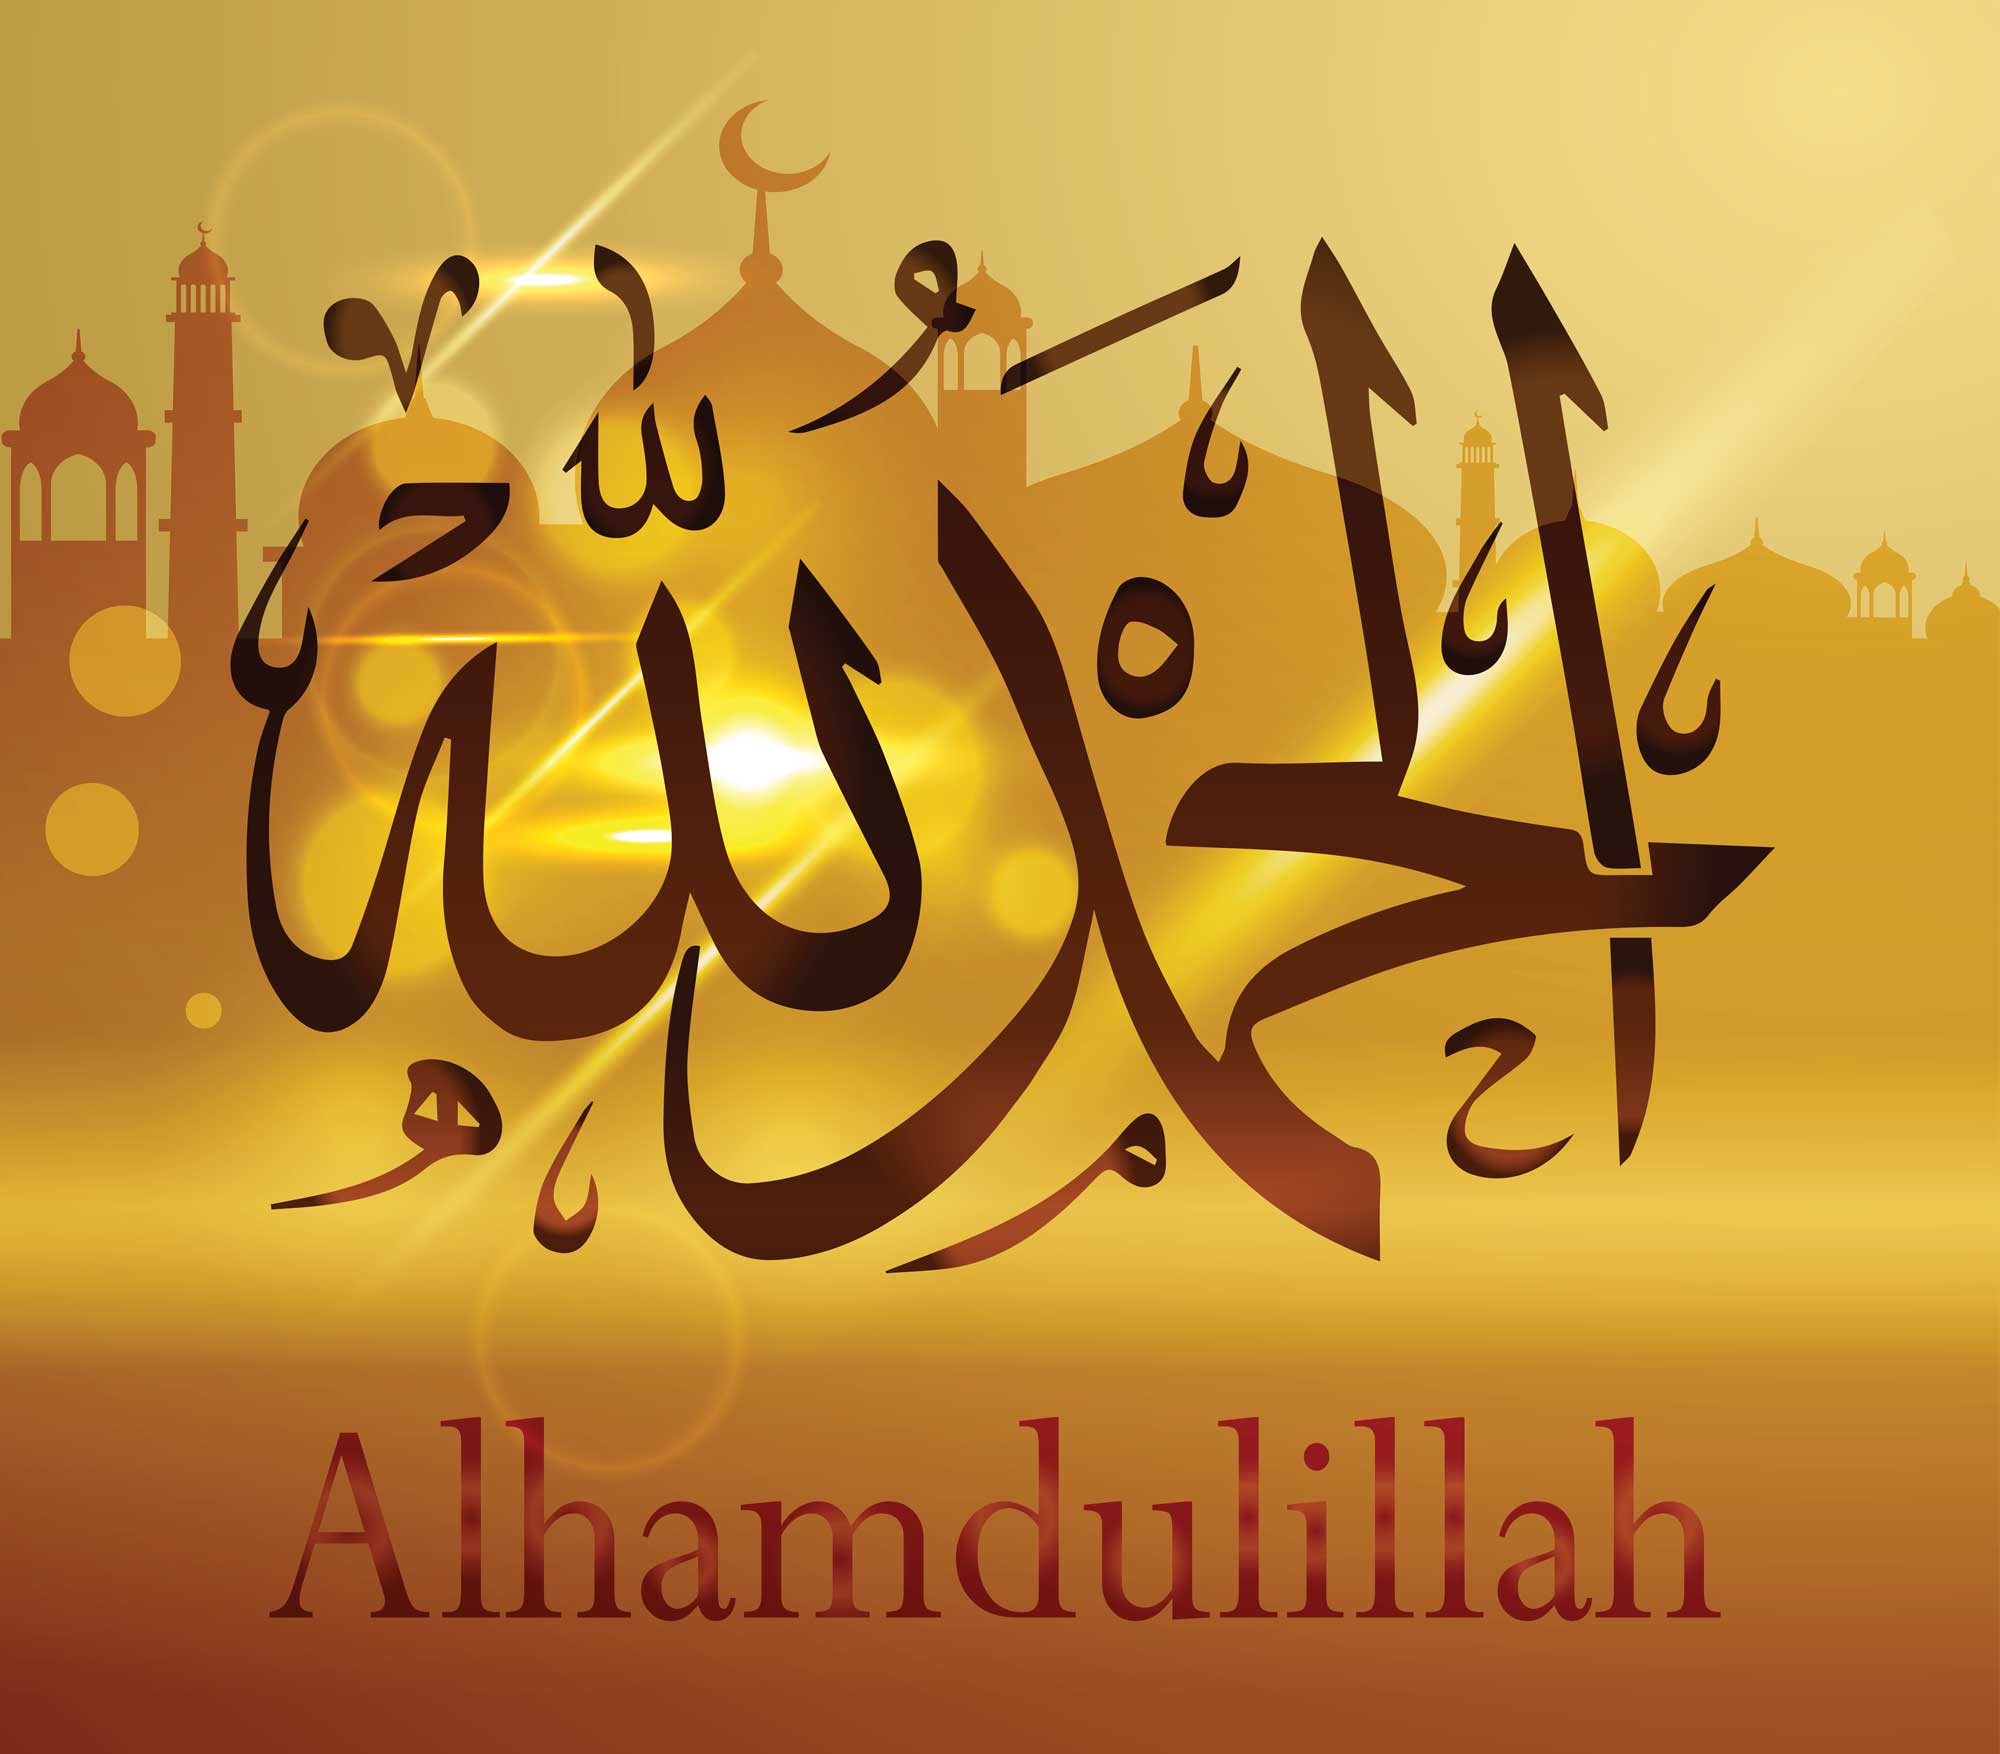 Dua Shukar - Thank Allah! | About Islam